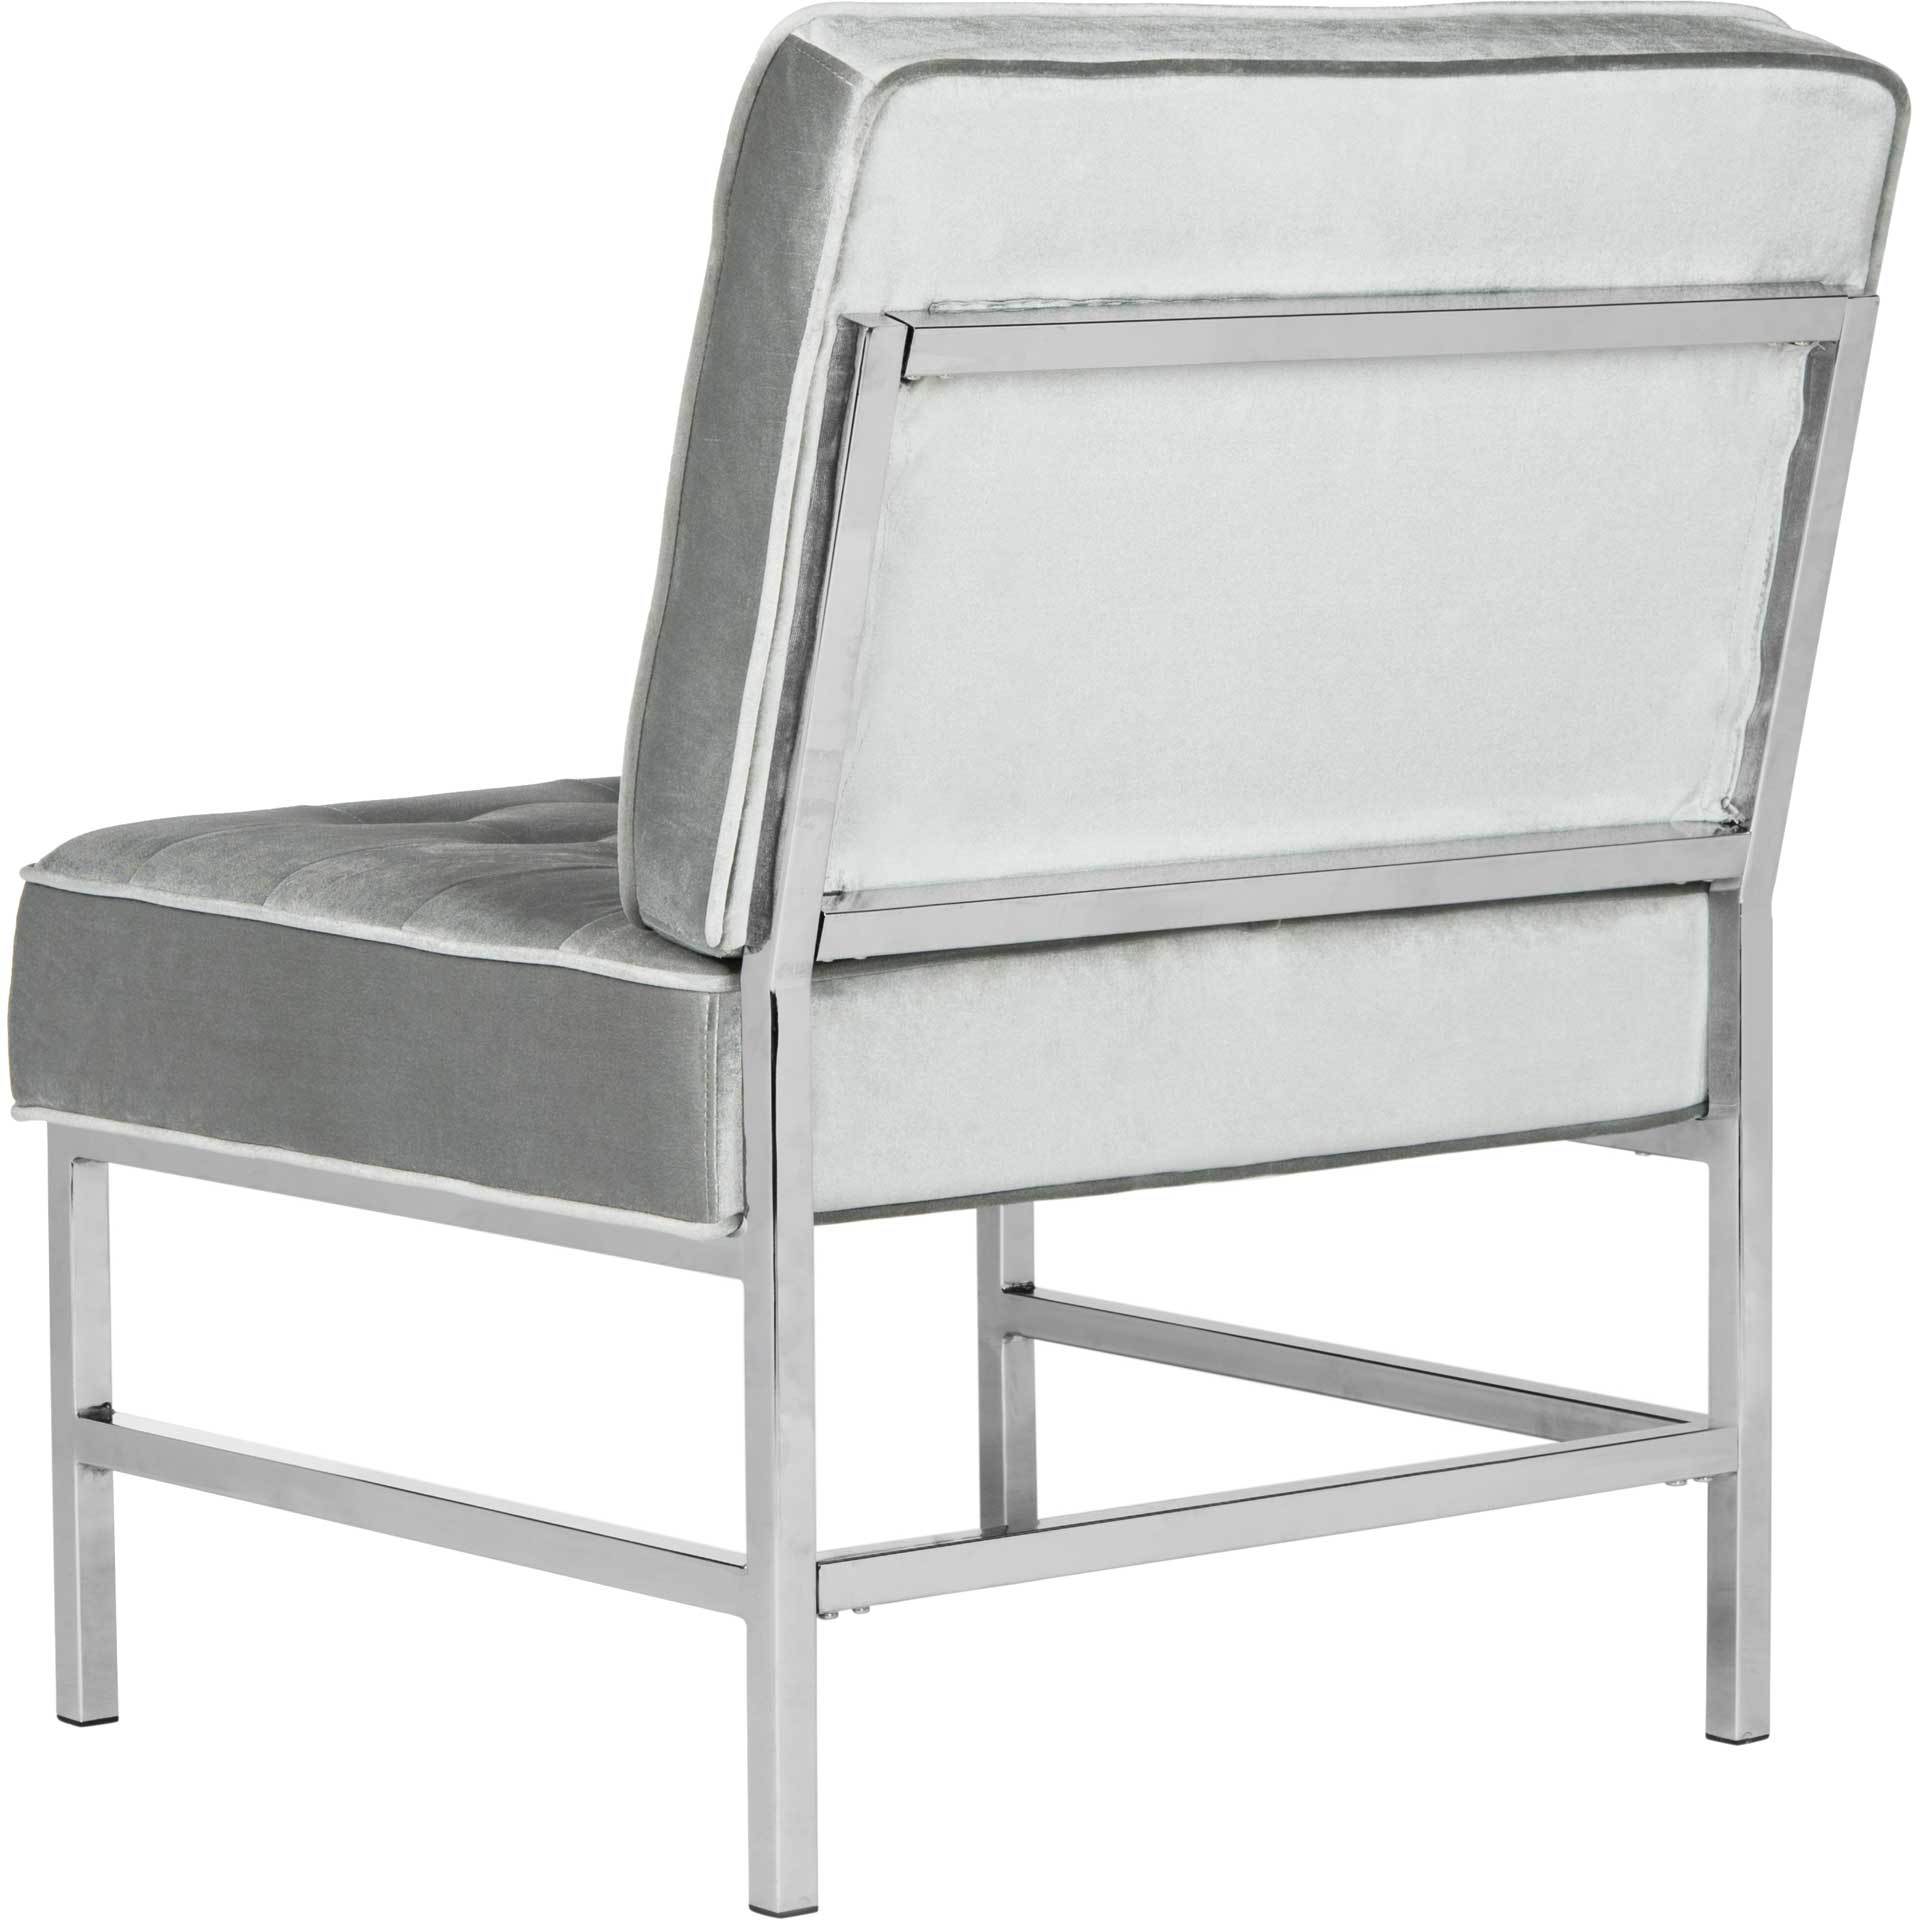 Anticipate Linen Chrome Accent Chair Light Gray